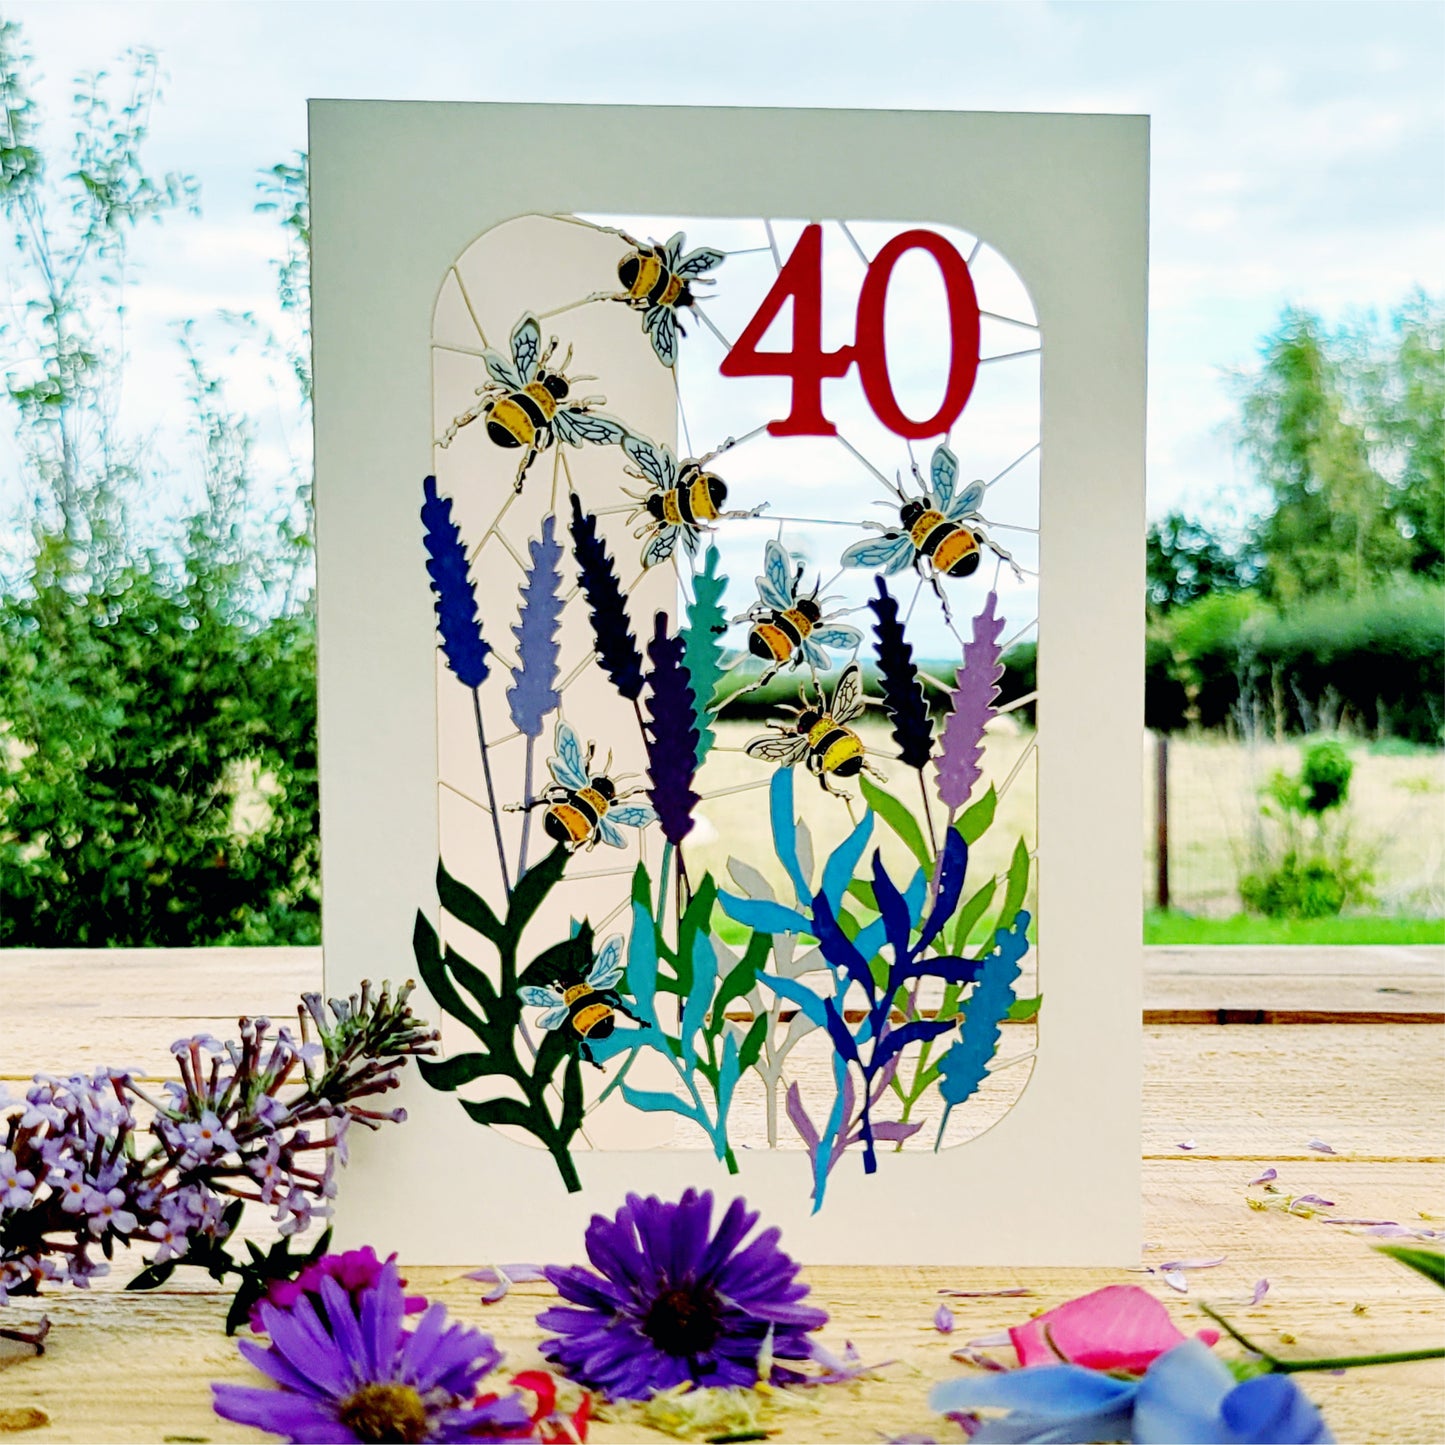 Age 40 Birthday Card, 40th Birthday Card, Bee Card - Be040